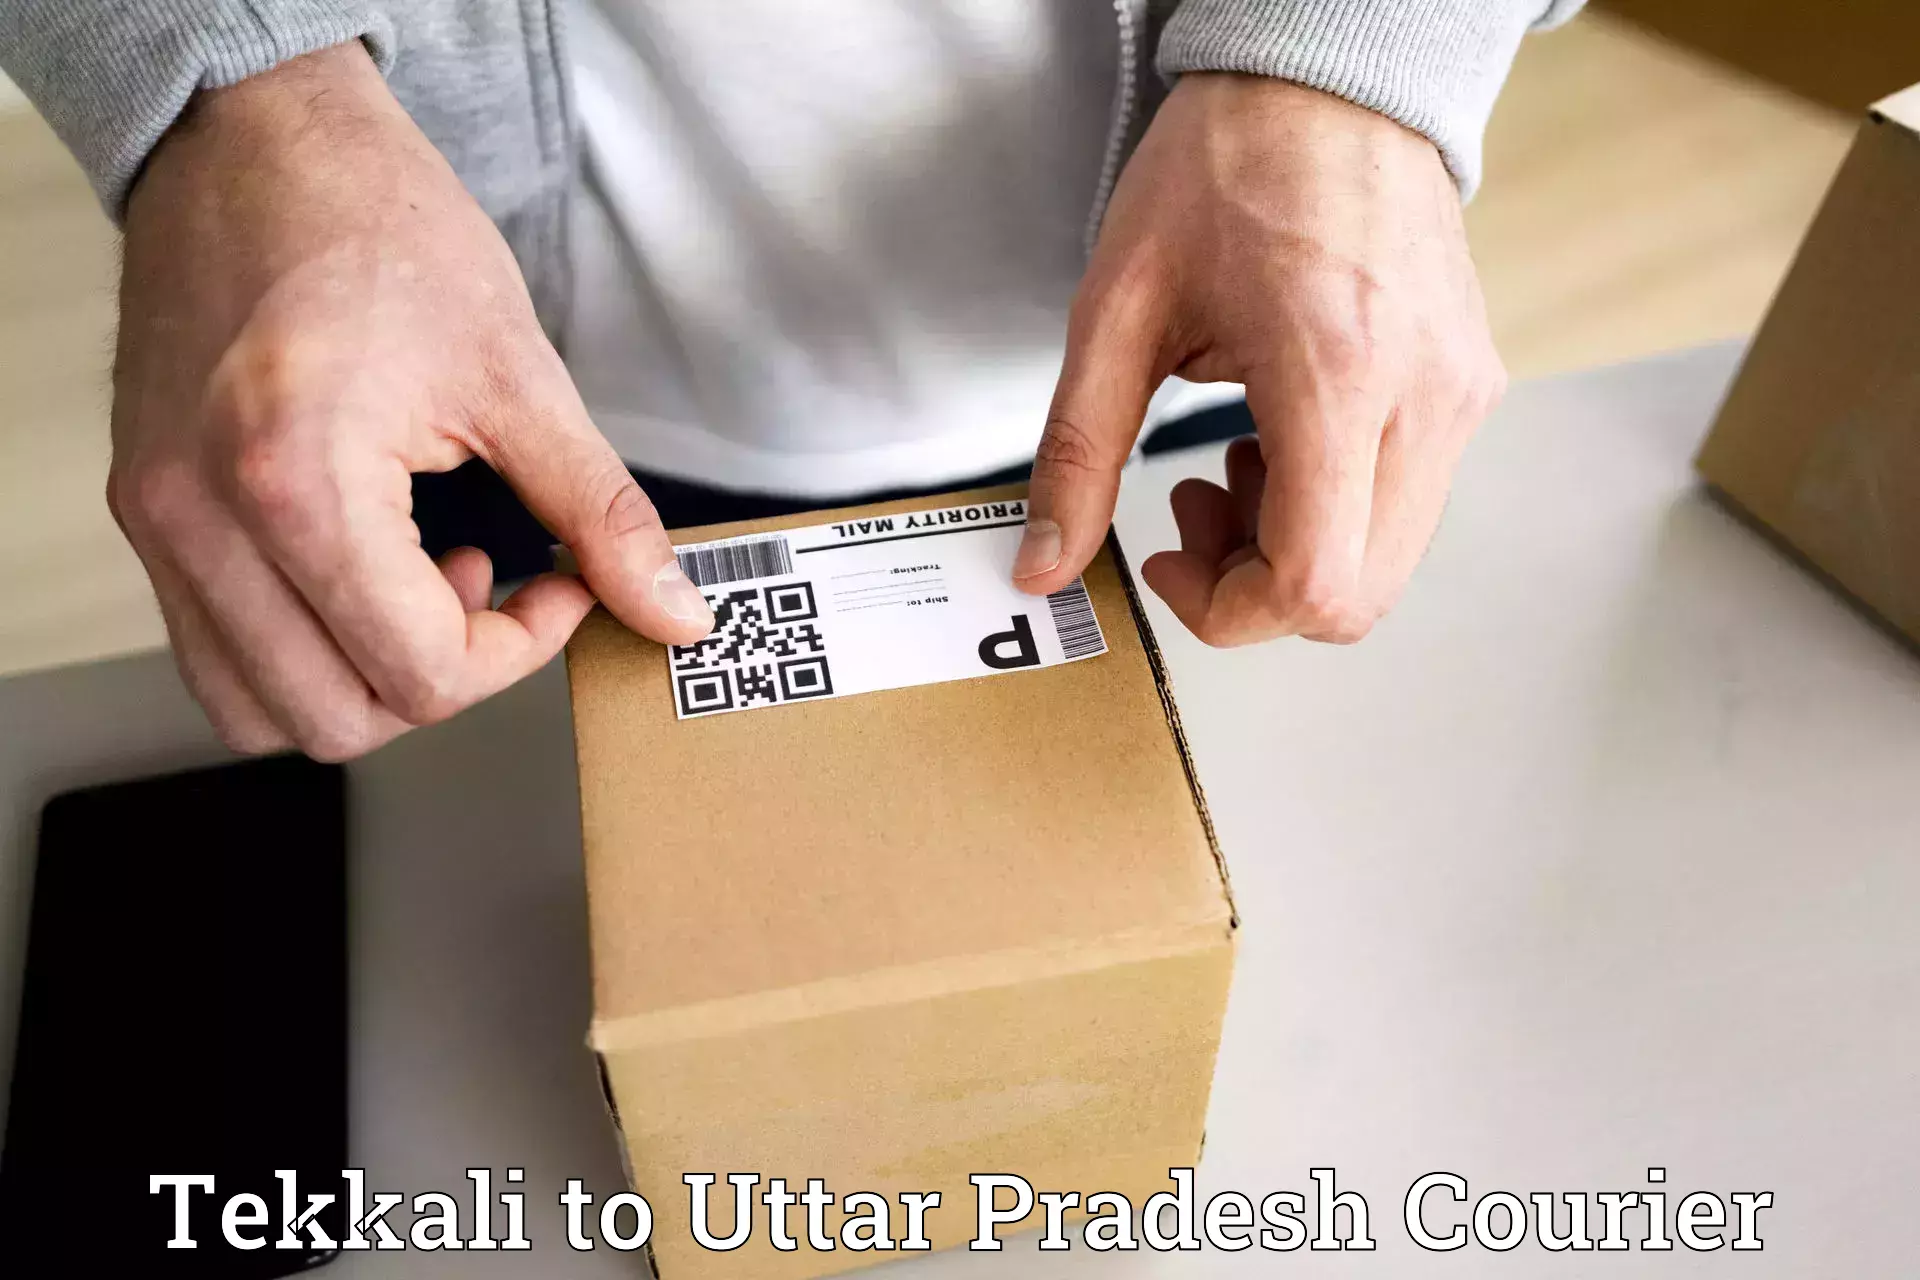 Bulk shipment Tekkali to Allahabad